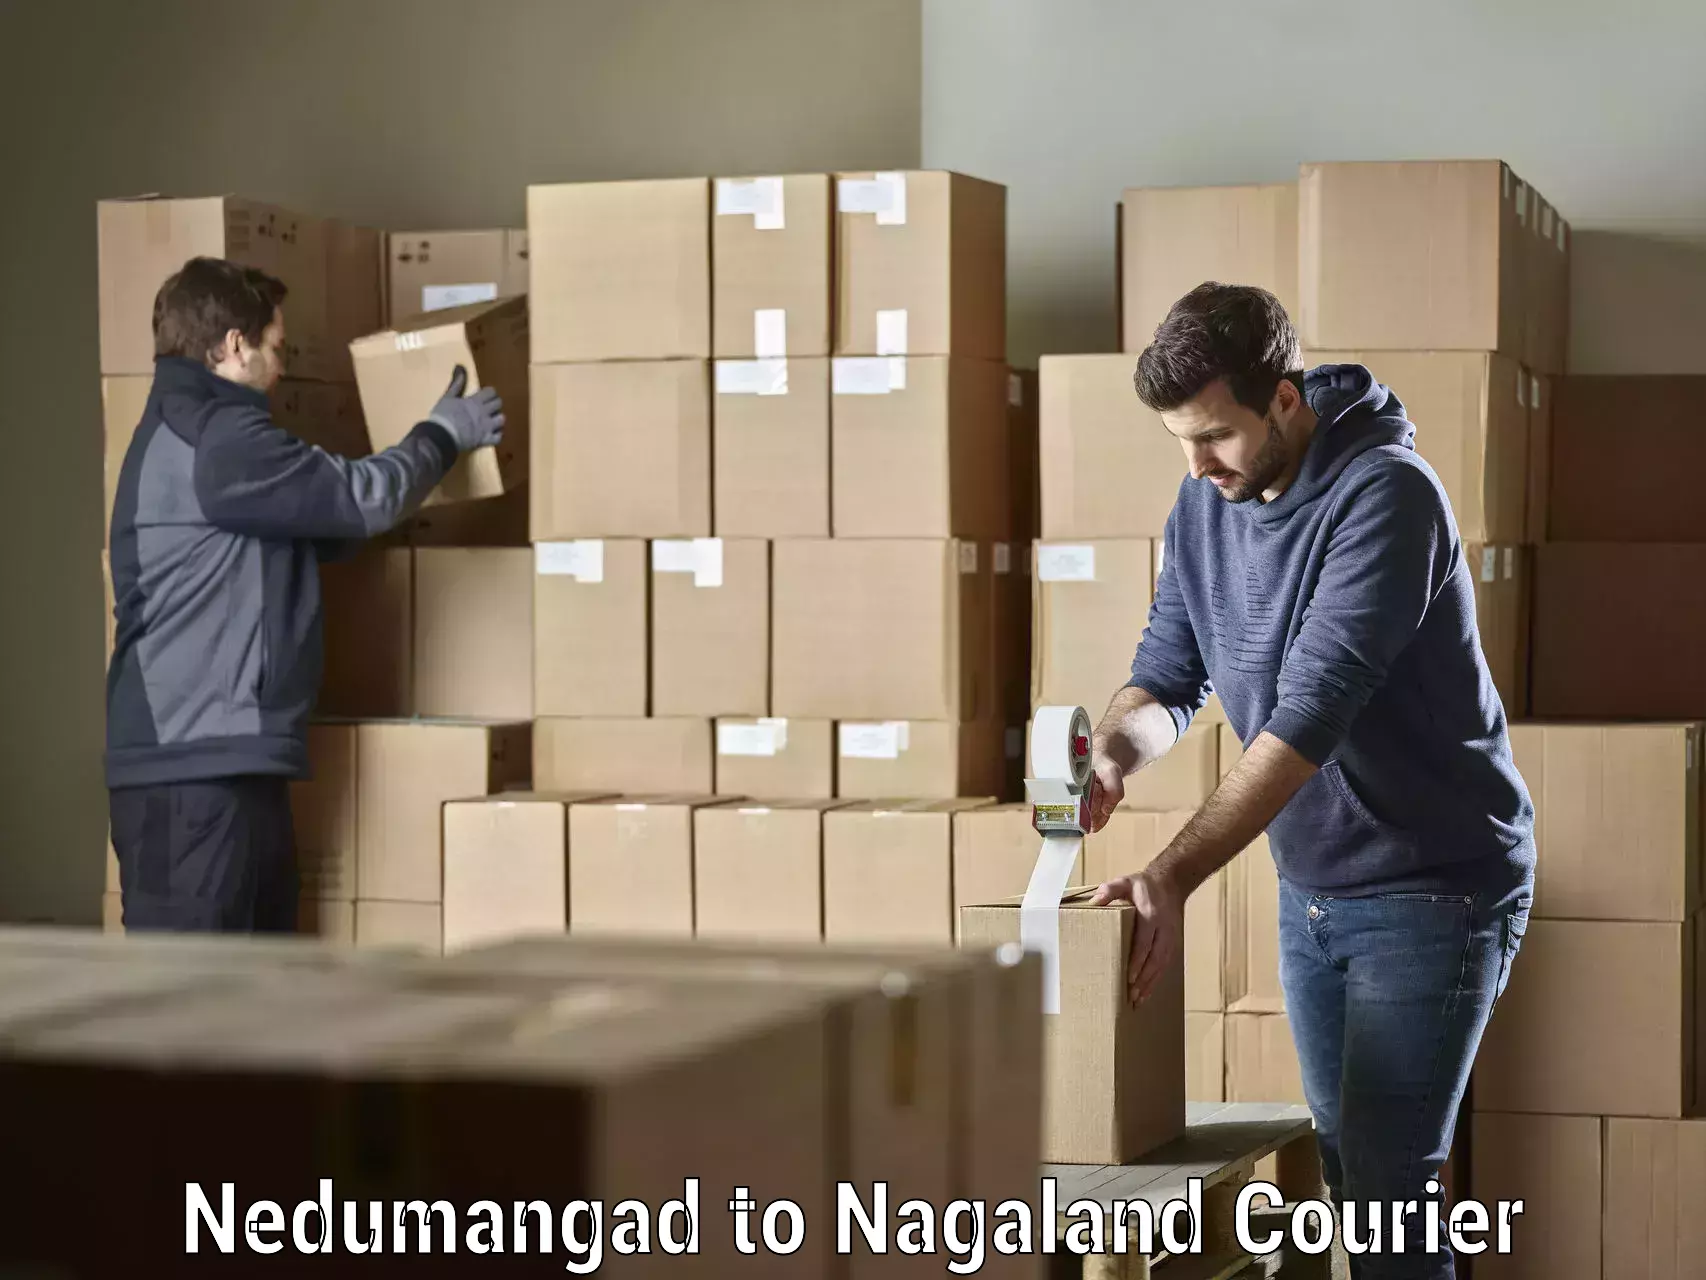 Nationwide delivery network Nedumangad to Kohima